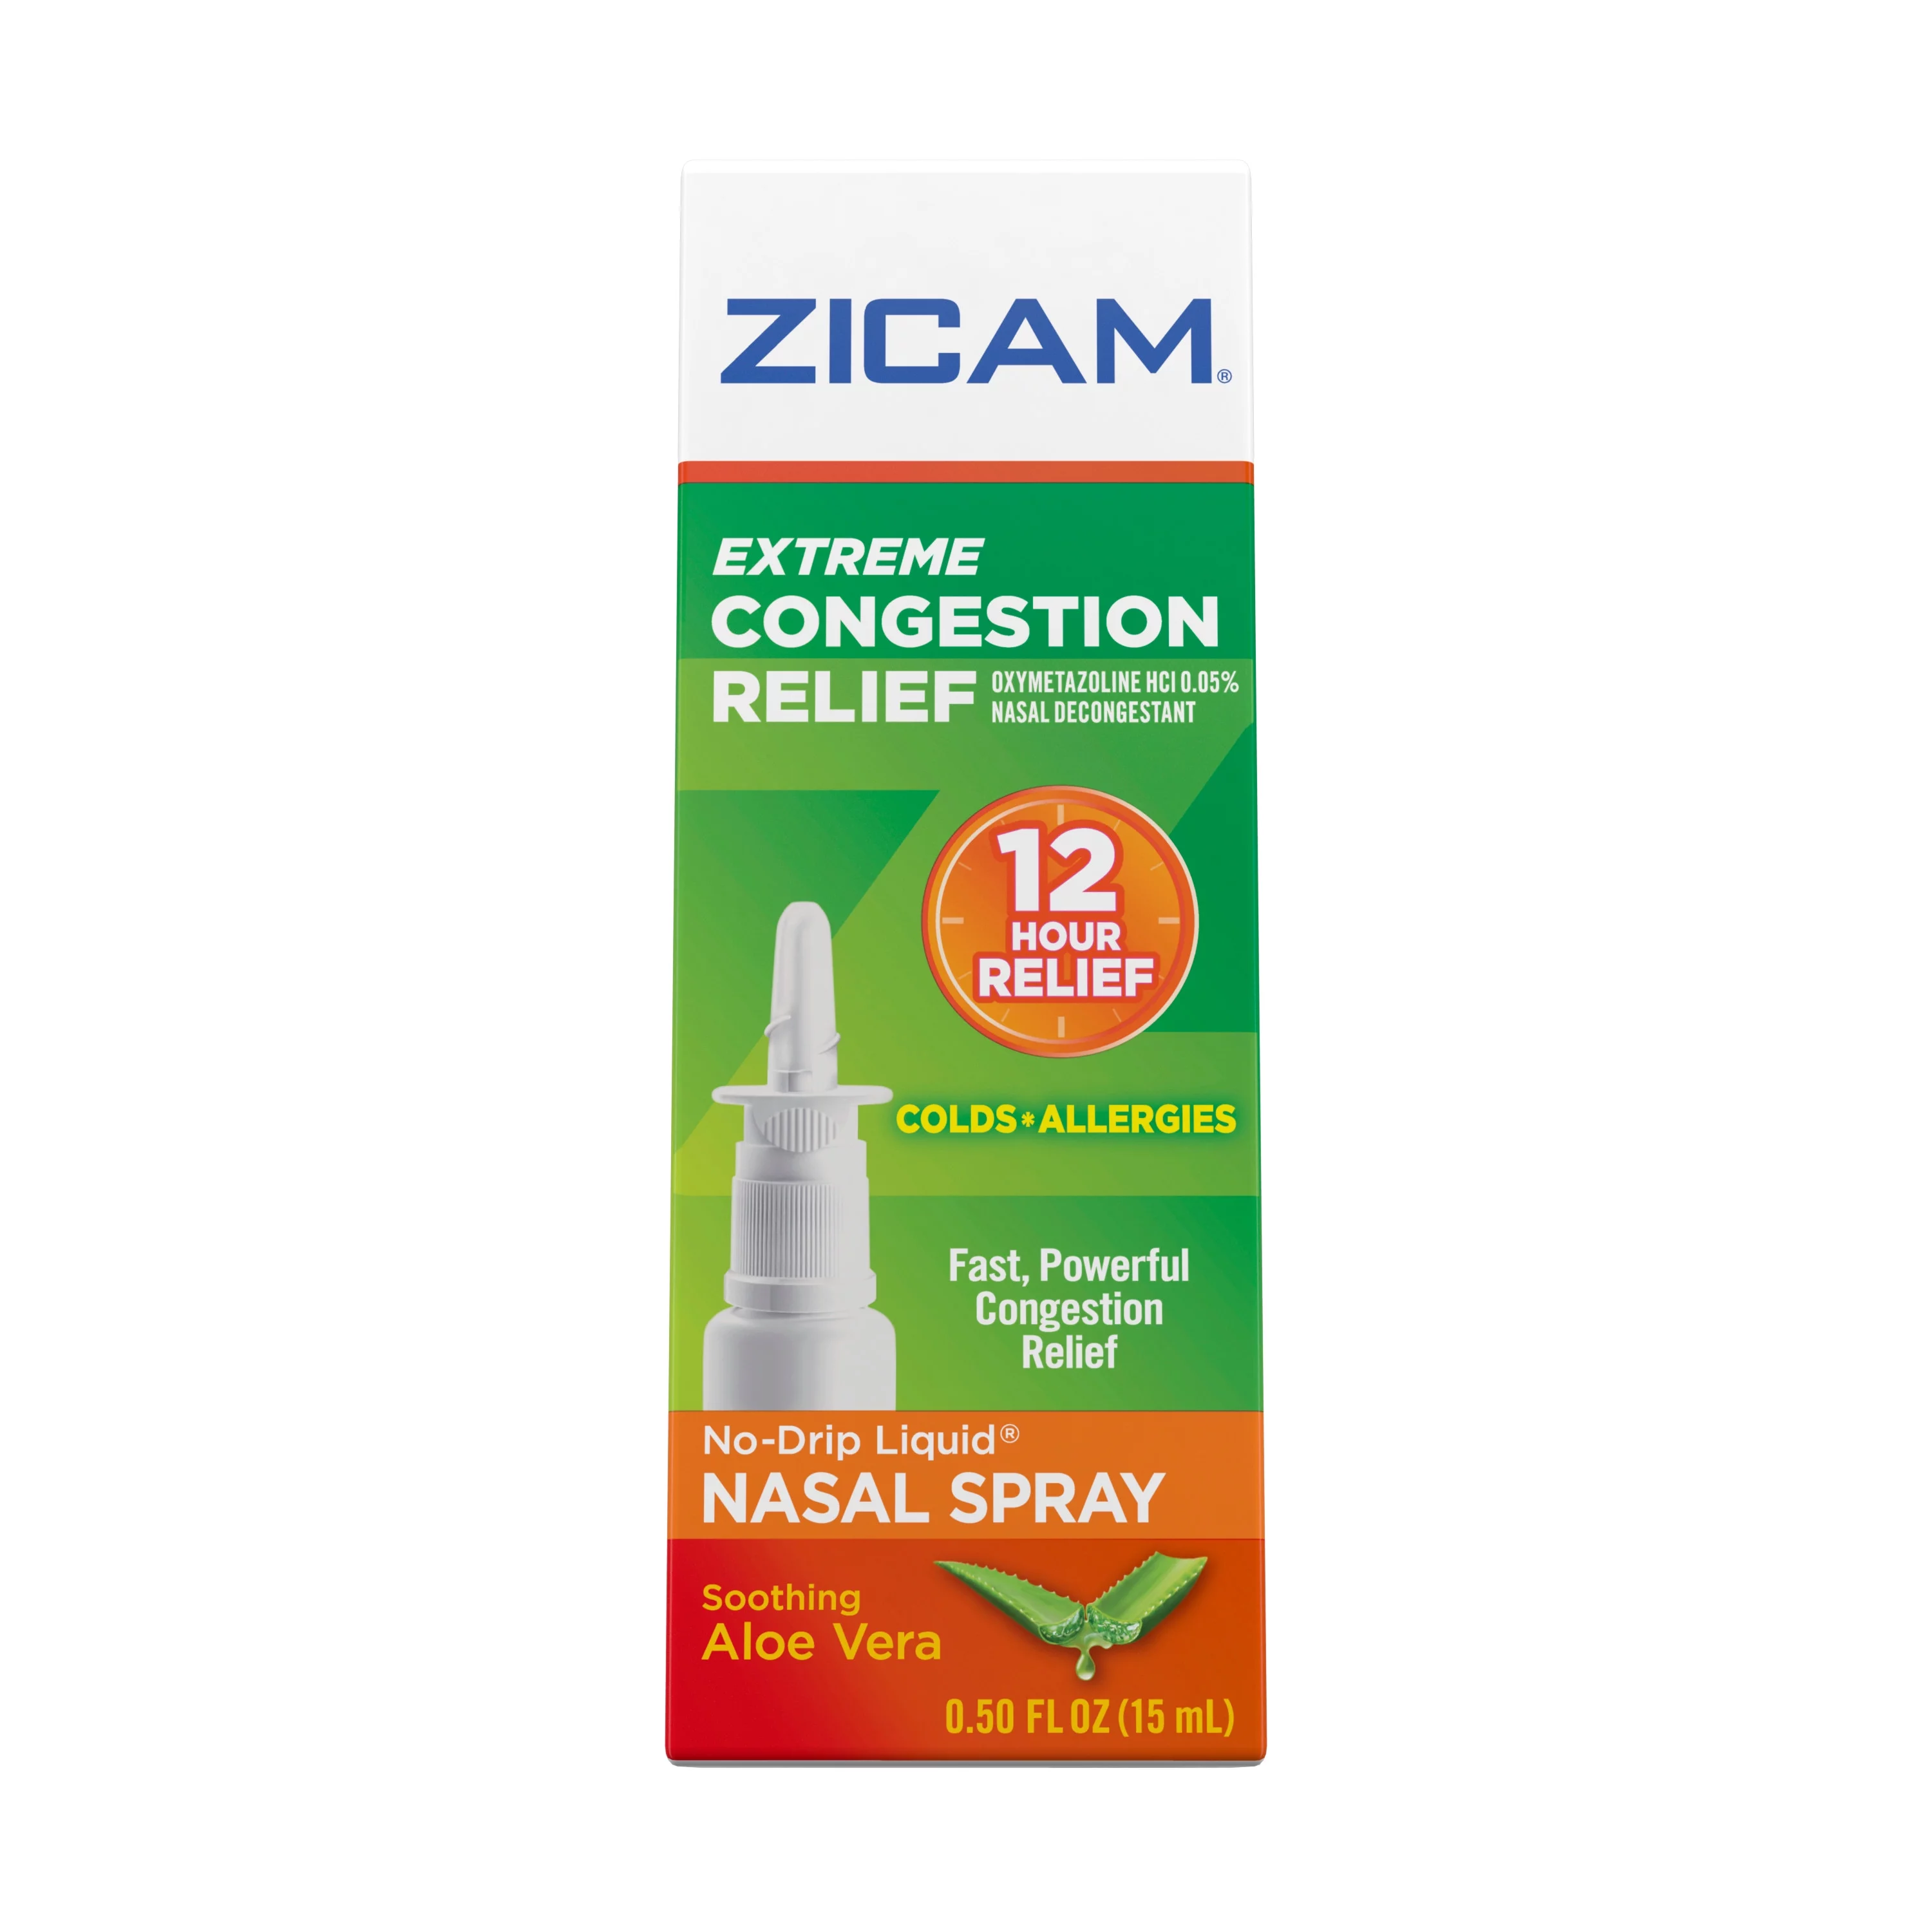 Zicam Extreme Congestion Relief No-Drip Nasal Spray with Soothing Aloe Vera 0.5 oz